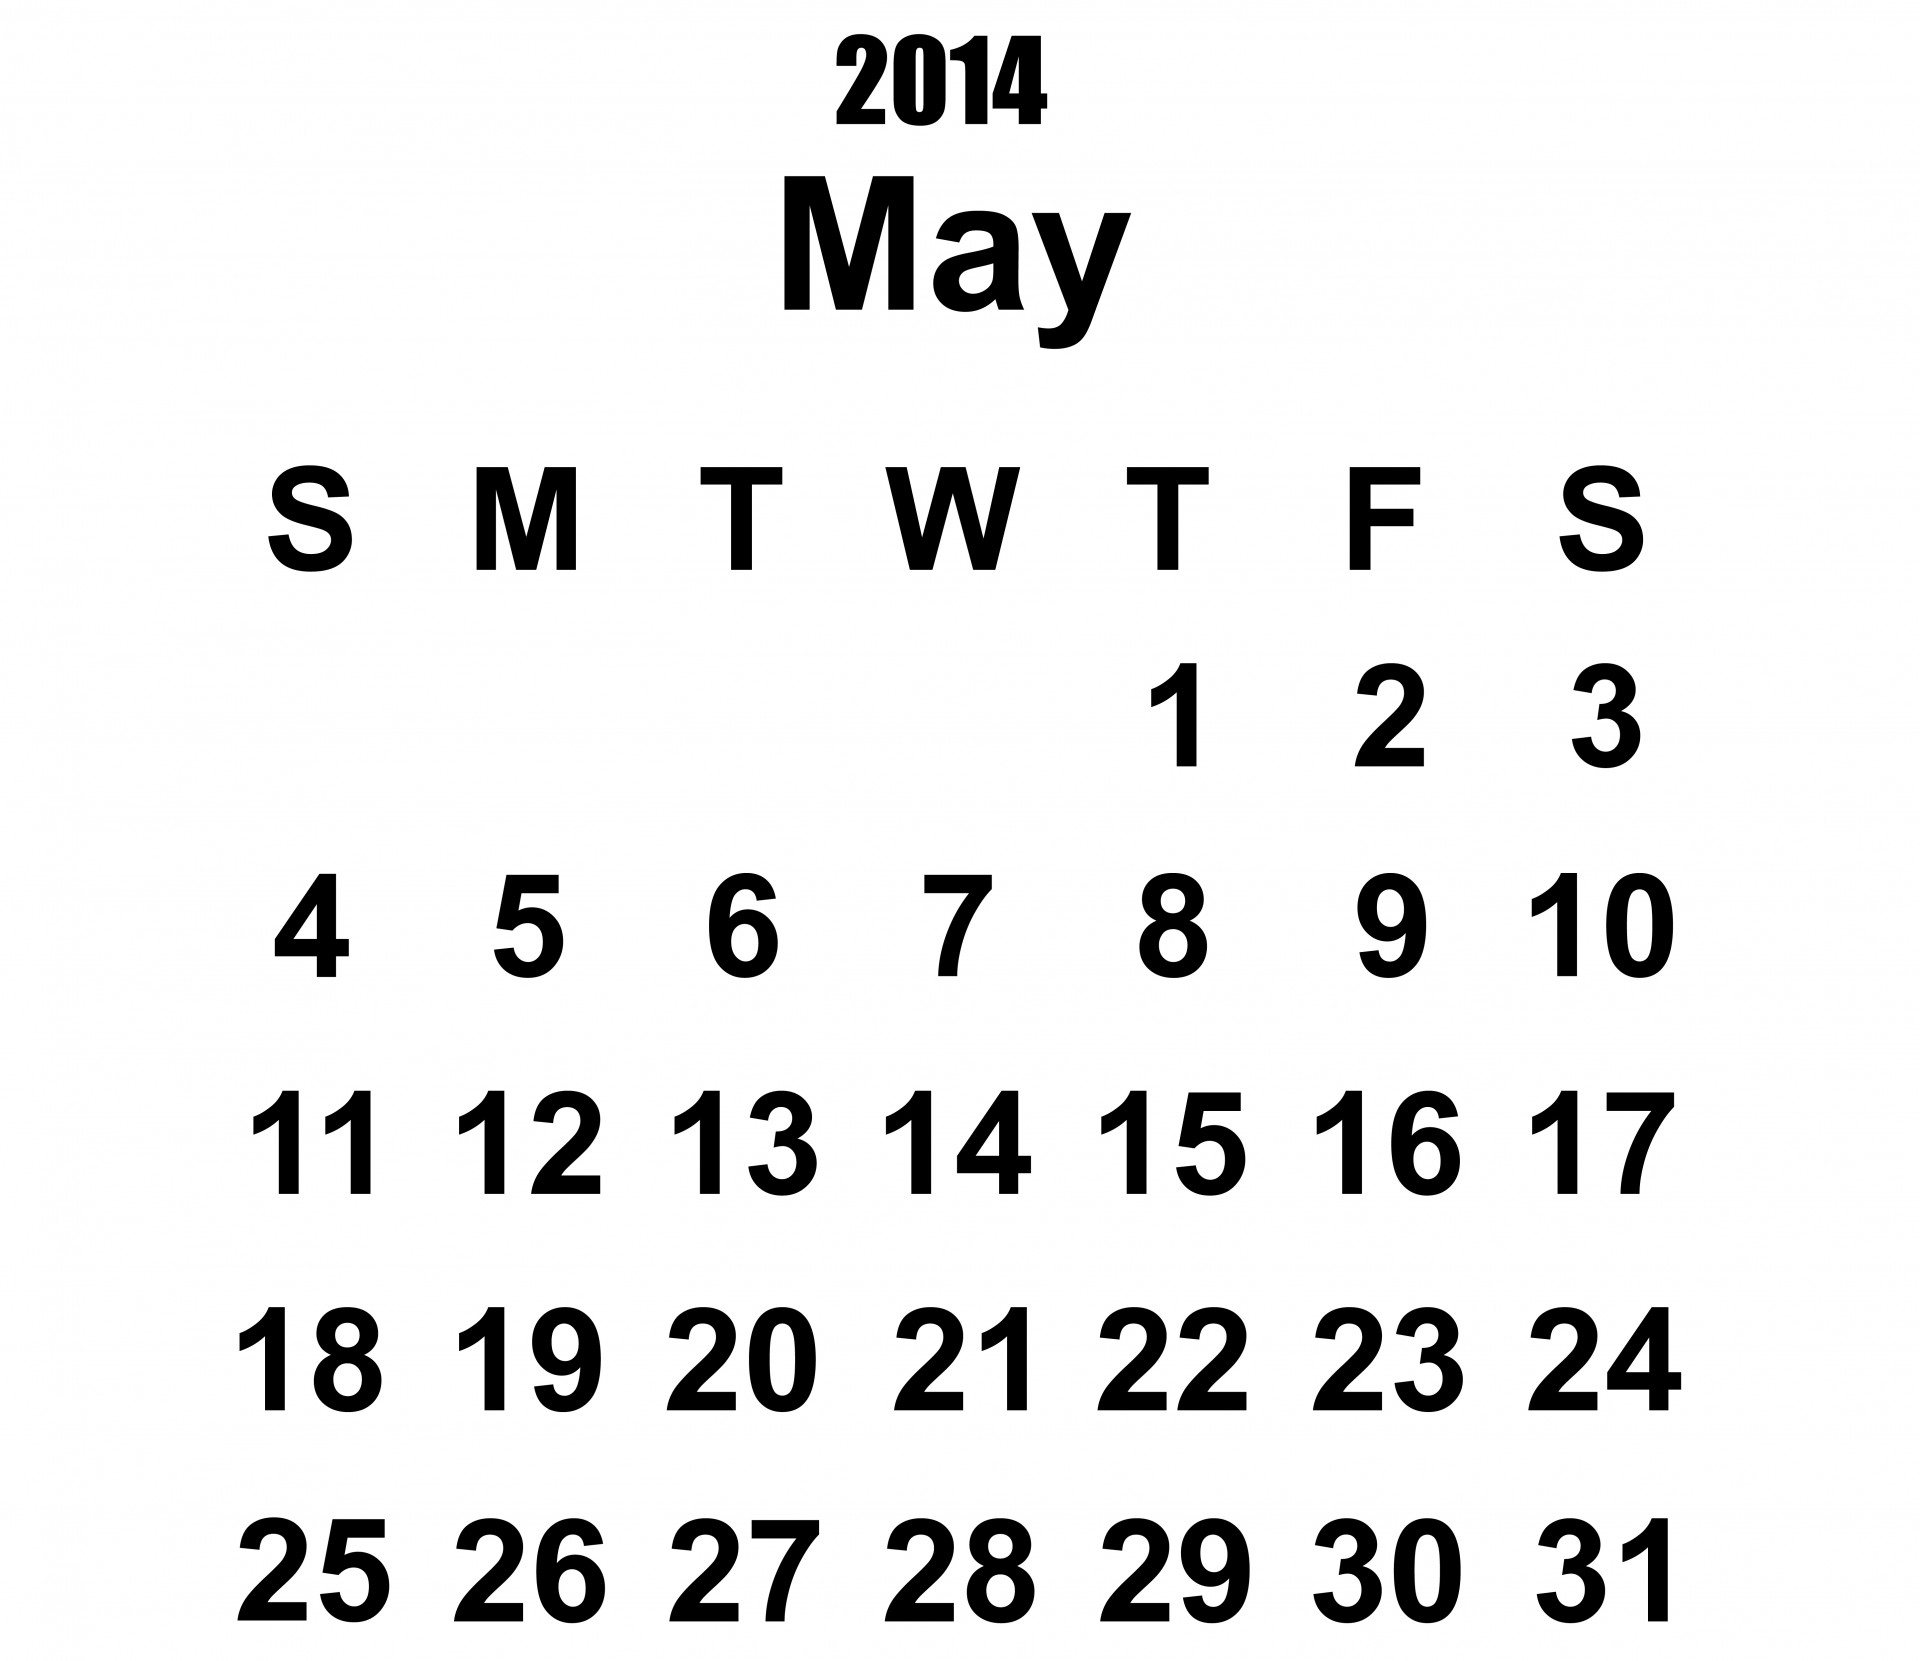 2014 calendar may 2014 calendar 2014 free photo